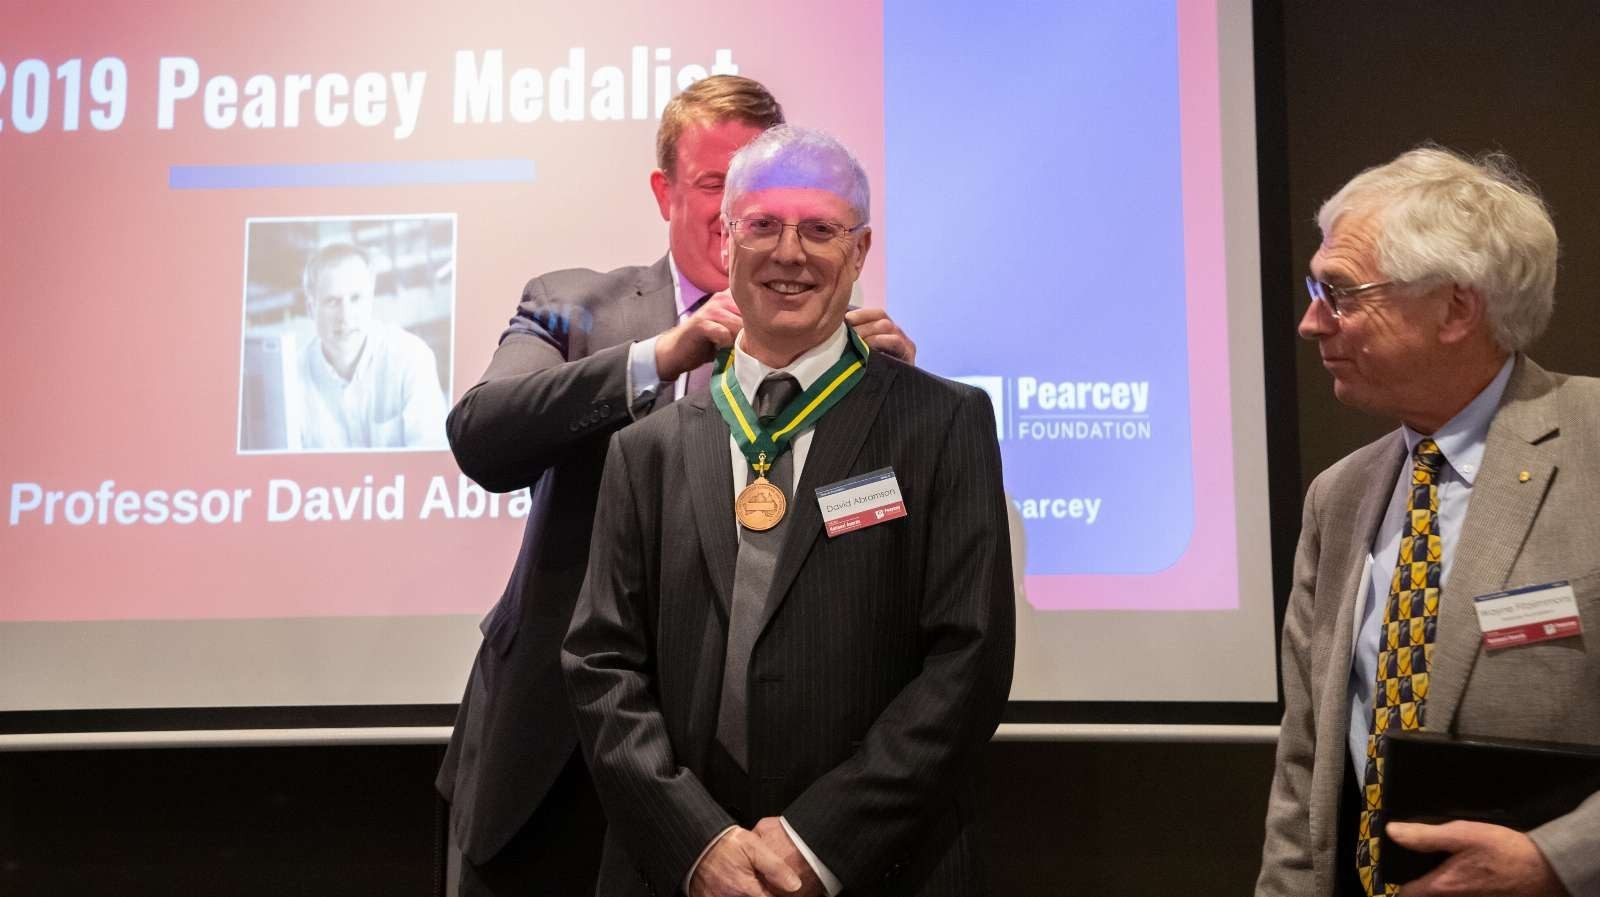 2019 Pearcey Medal